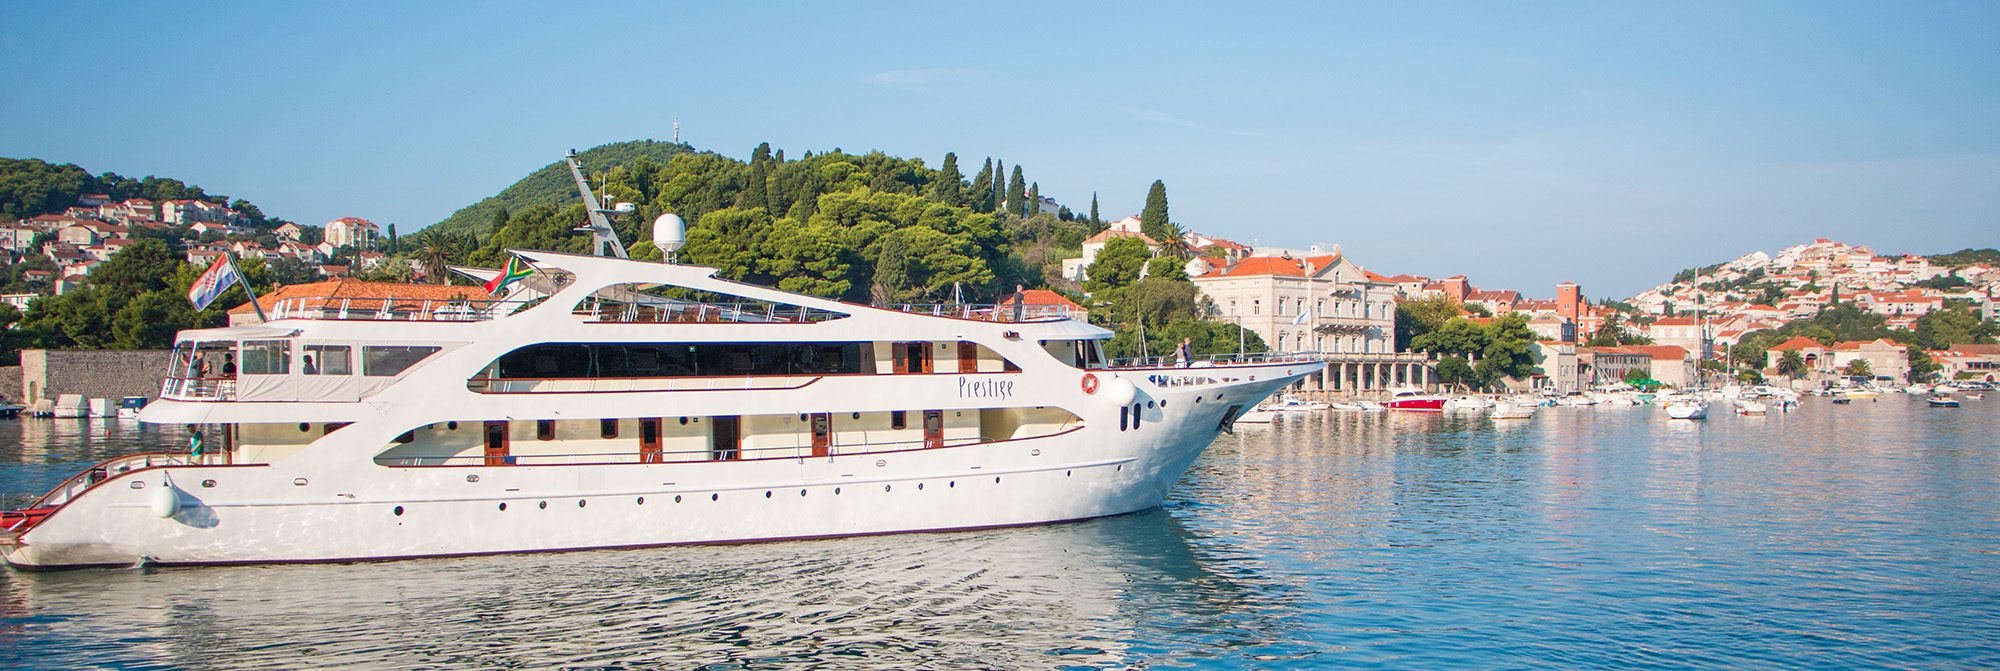 celebrity cruise italy and croatia